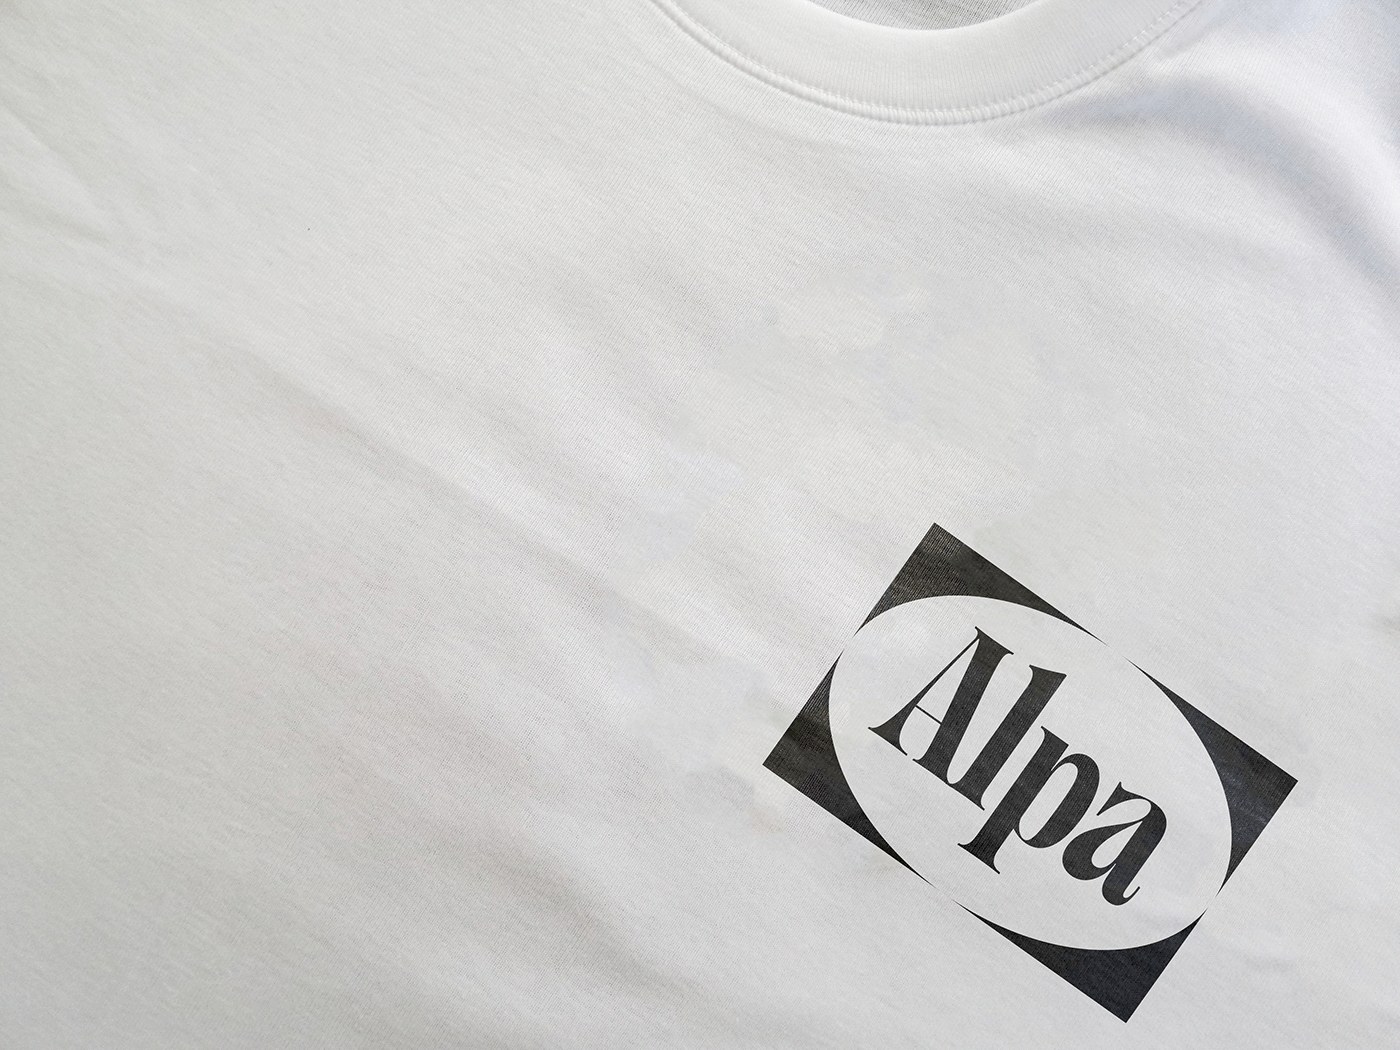 Logo Alpa